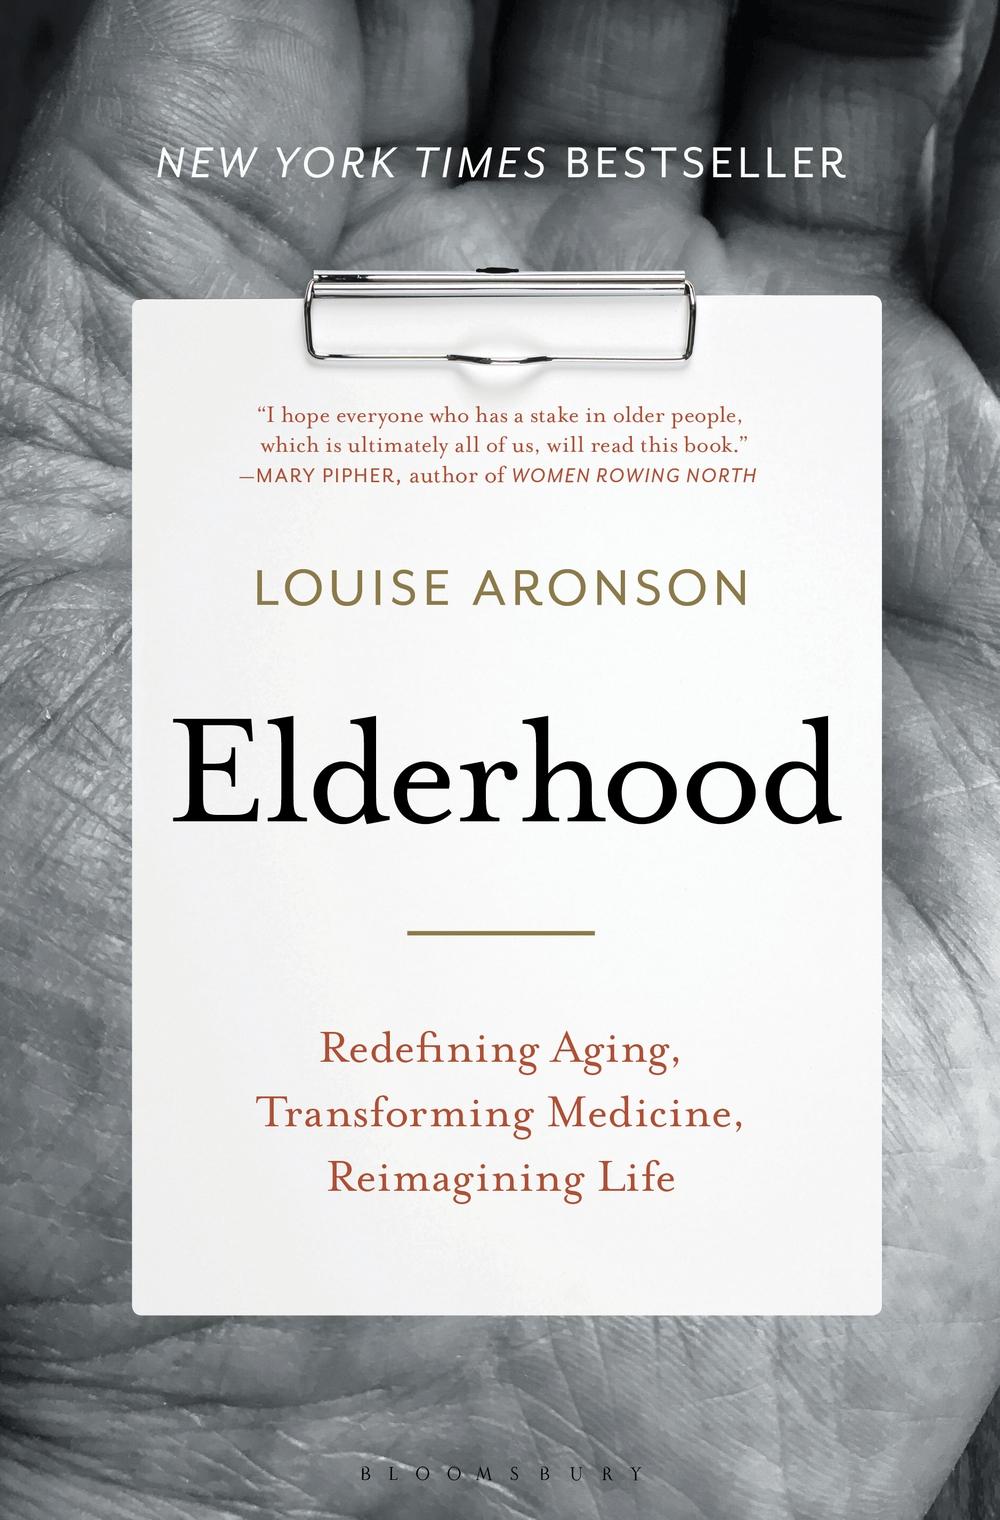 Elderhood - Louise Aronson